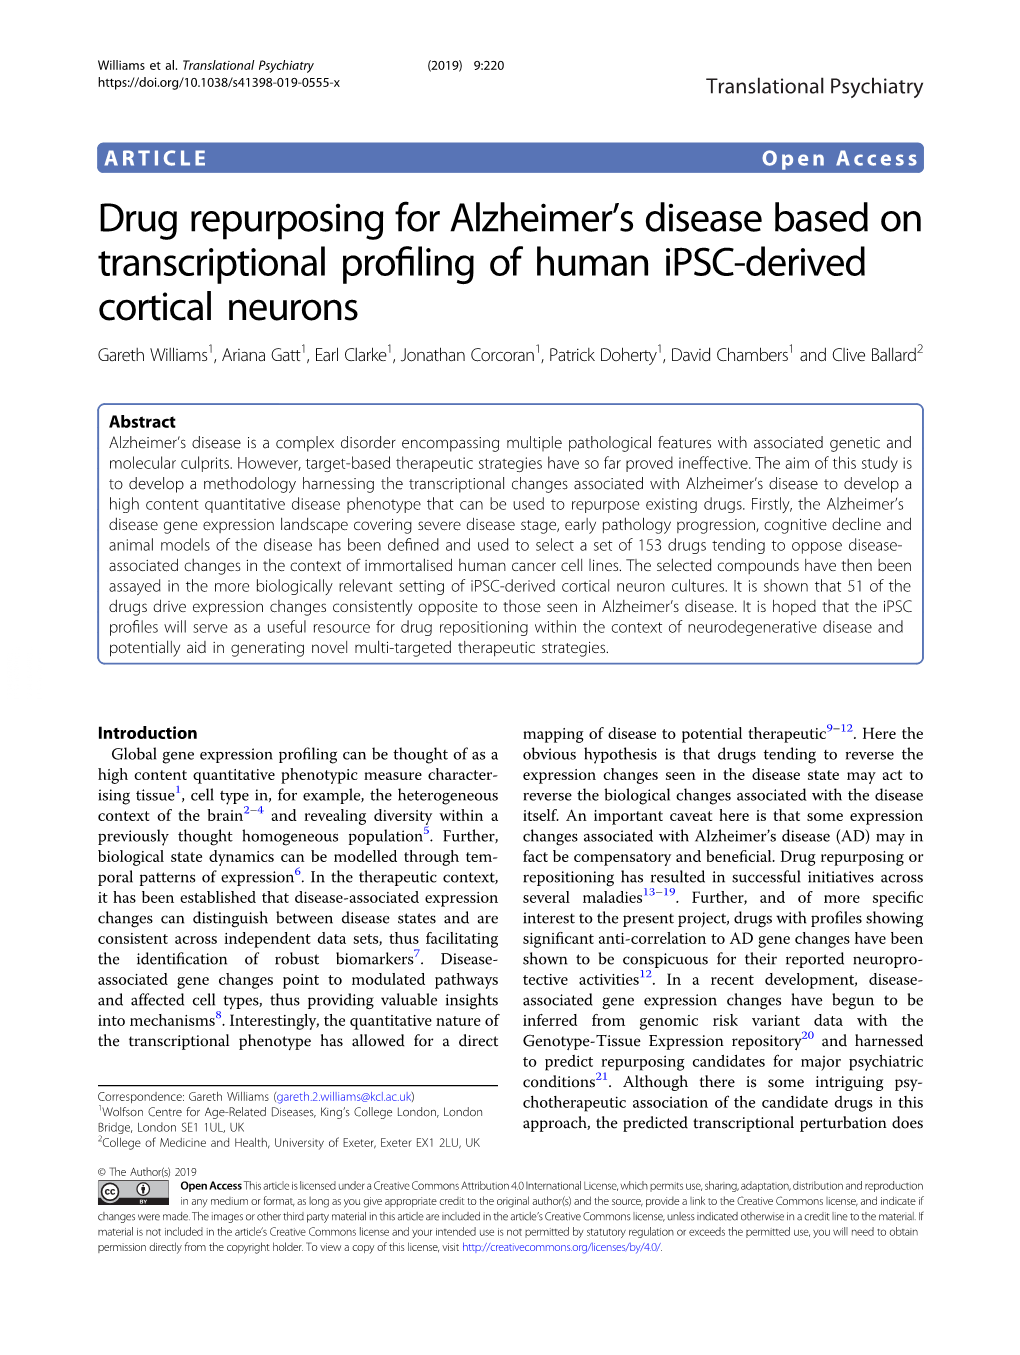 Drug Repurposing for Alzheimer's Disease Based on Transcriptional Profiling of Human Ipsc-Derived Cortical Neurons